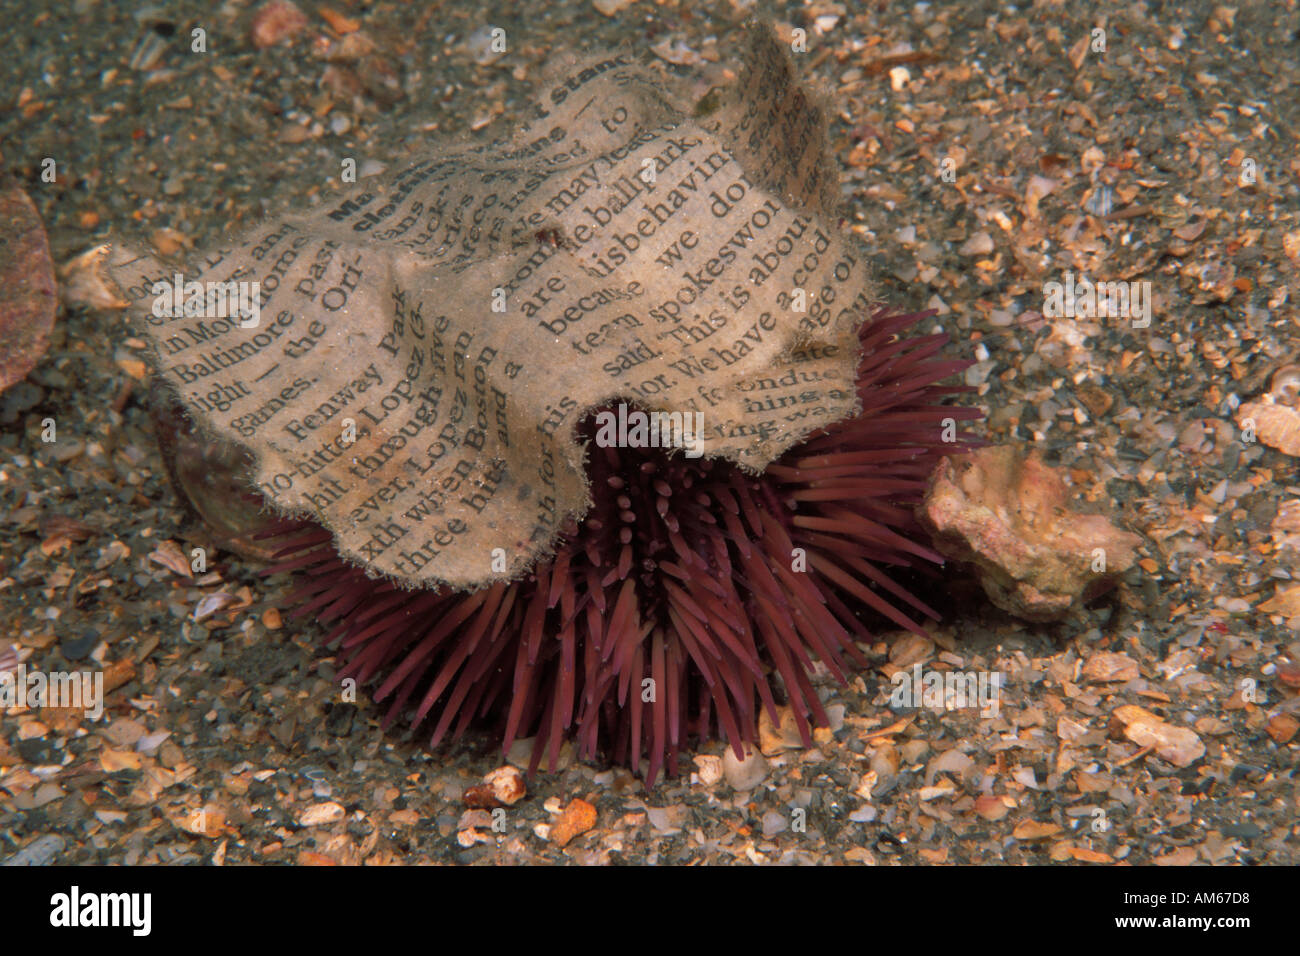 Variegated Urchin Lytechinus variegatus using newspaper as protection Stock Photo